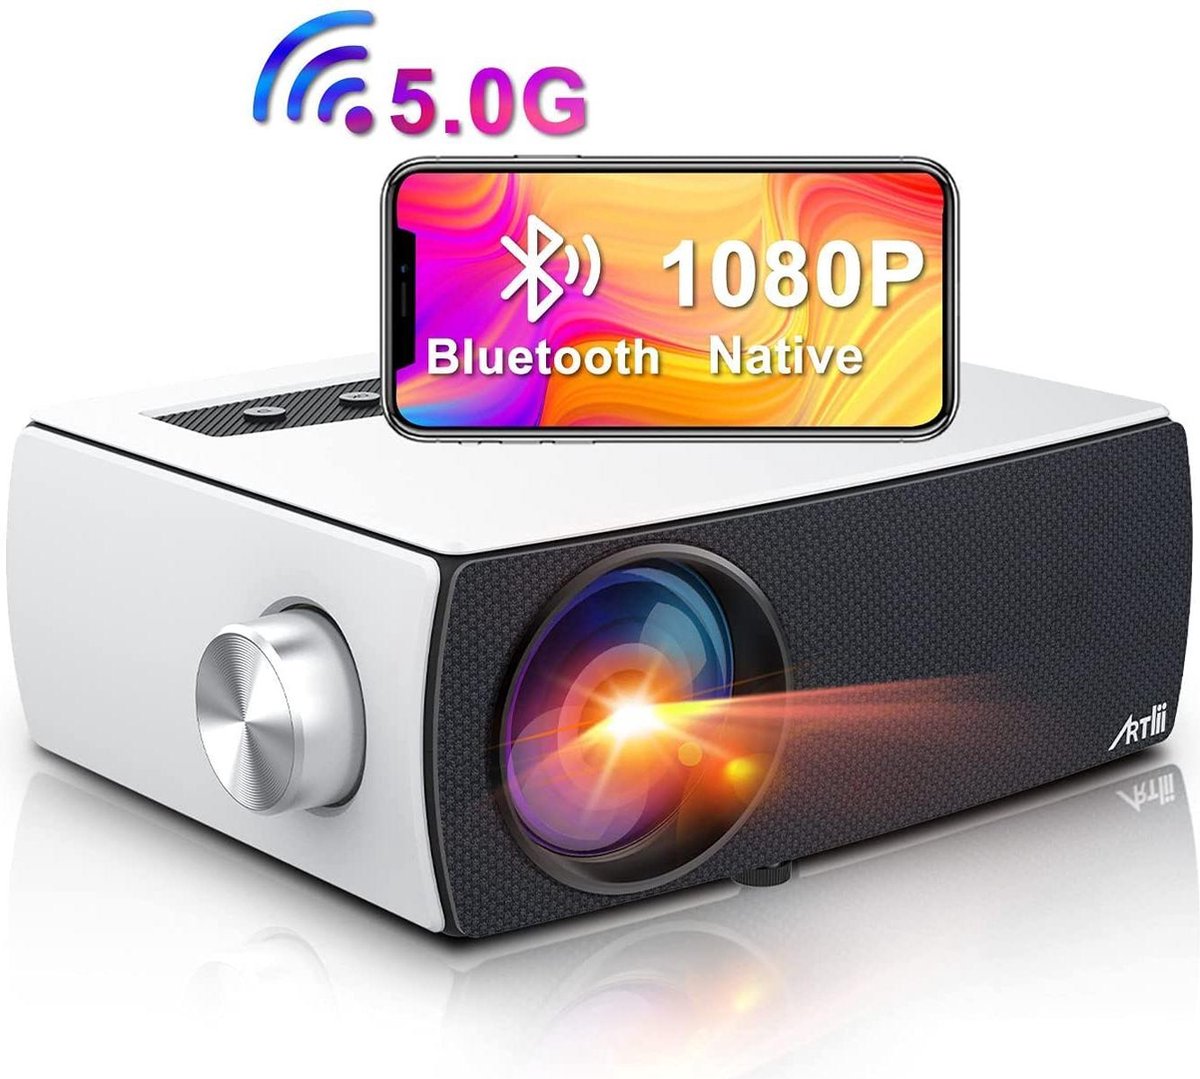 Artlii Enjoy 3 Native 1080P Mini Projector - 5Ghz - WiFi Bluetooth - Wit